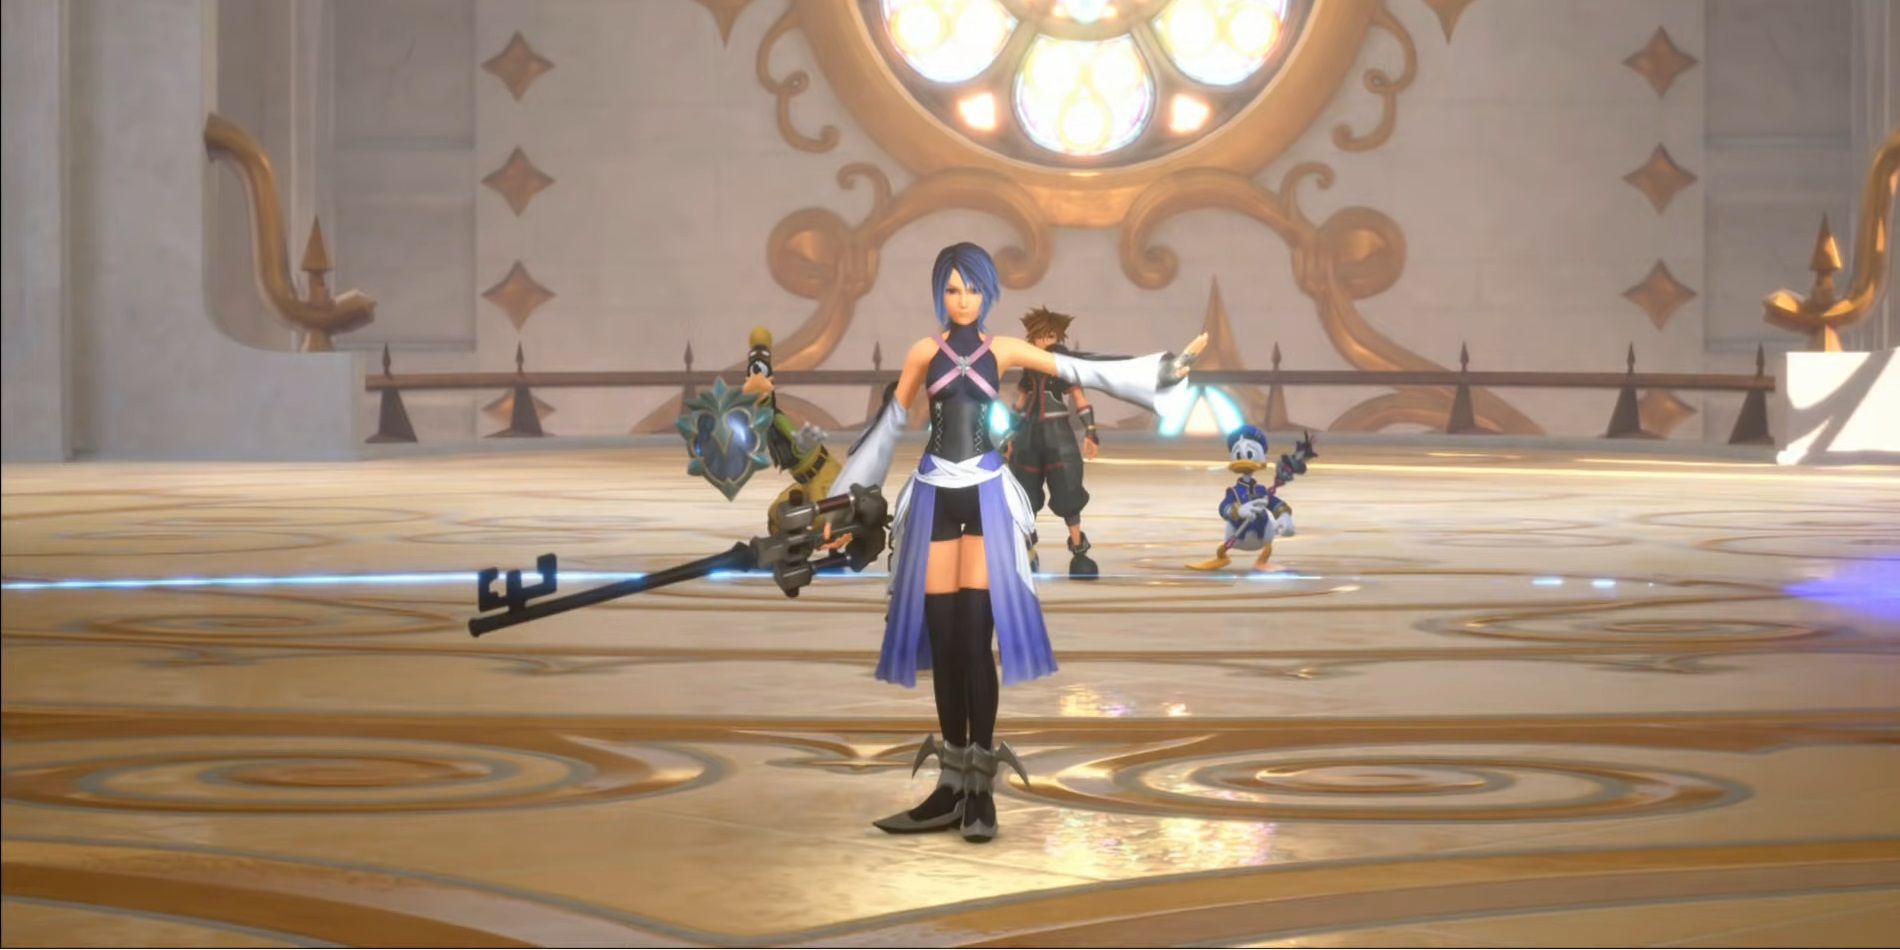 Kingdom Hearts - Aqua decides to fight alone